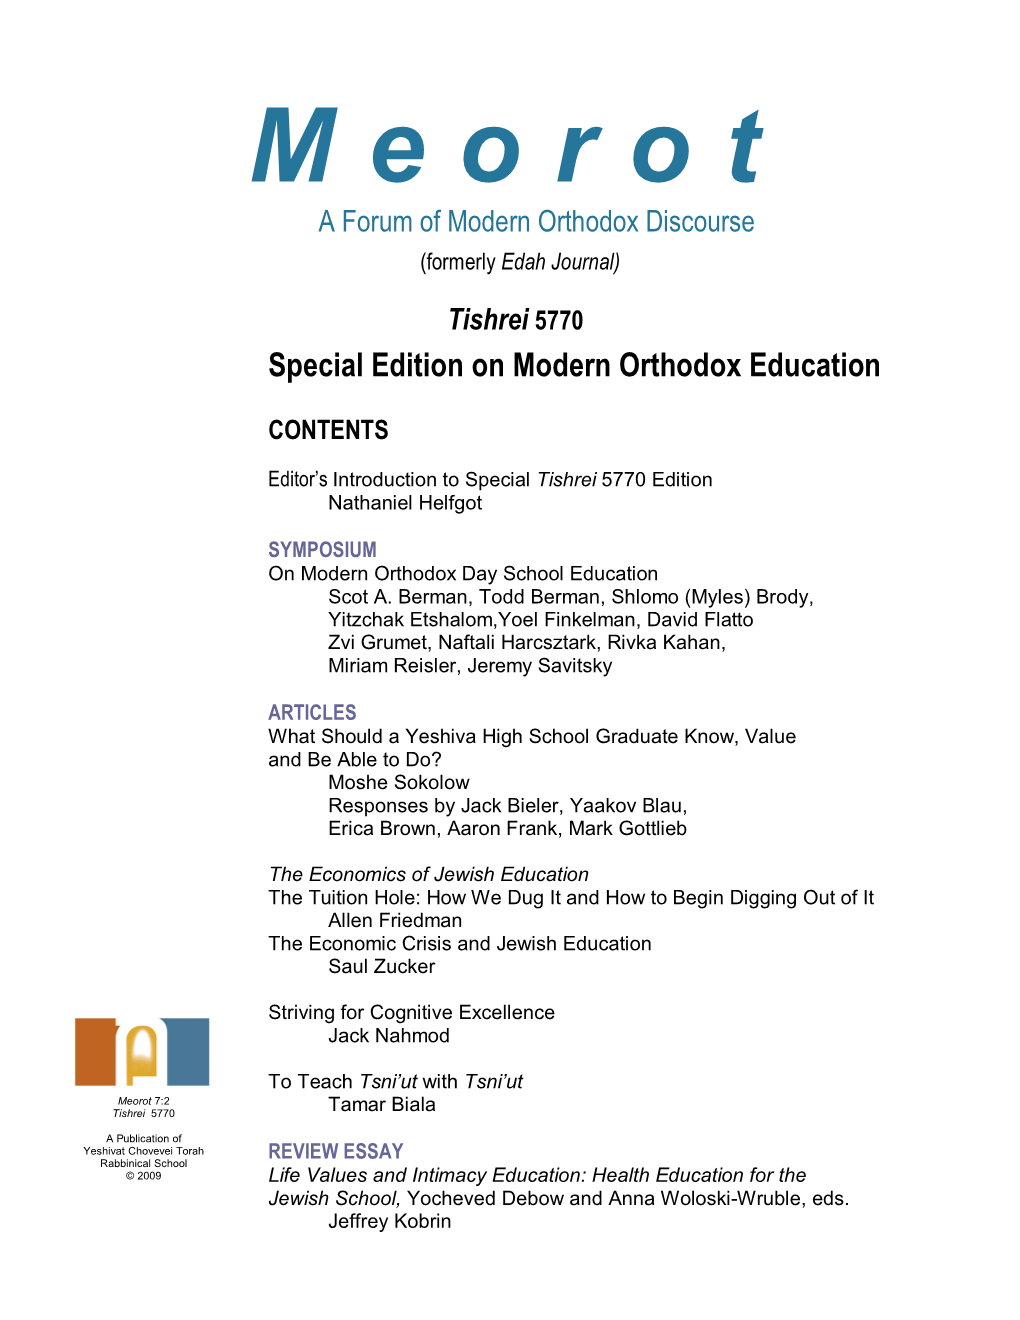 M E O R O T a Forum of Modern Orthodox Discourse (Formerly Edah Journal)